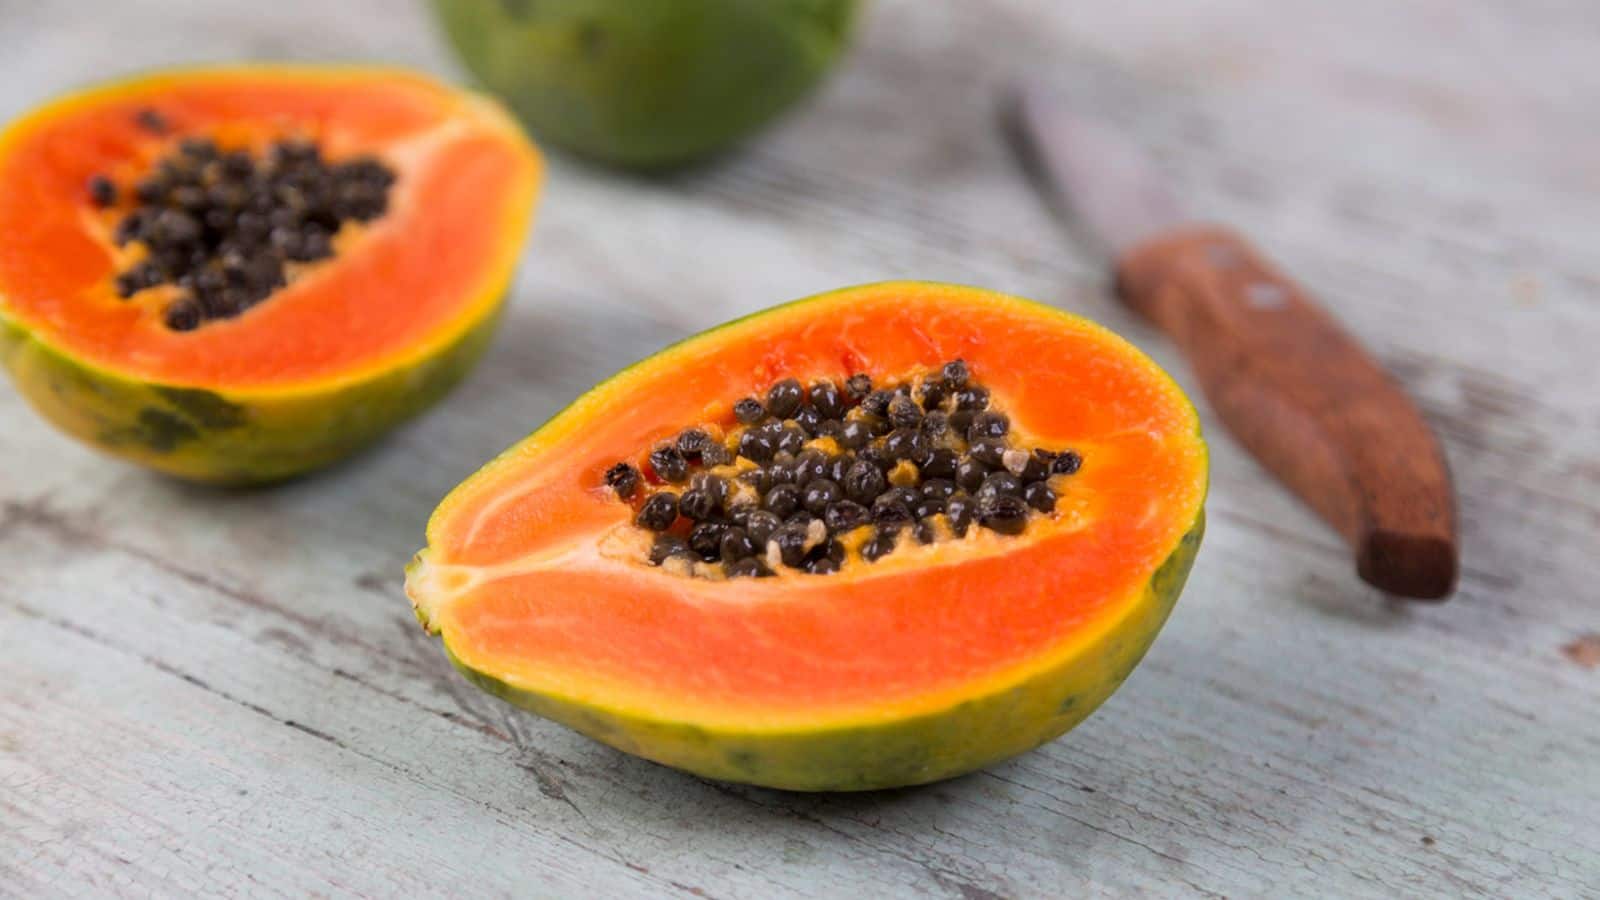 Papaya-based dishes that offer anti-aging benefits